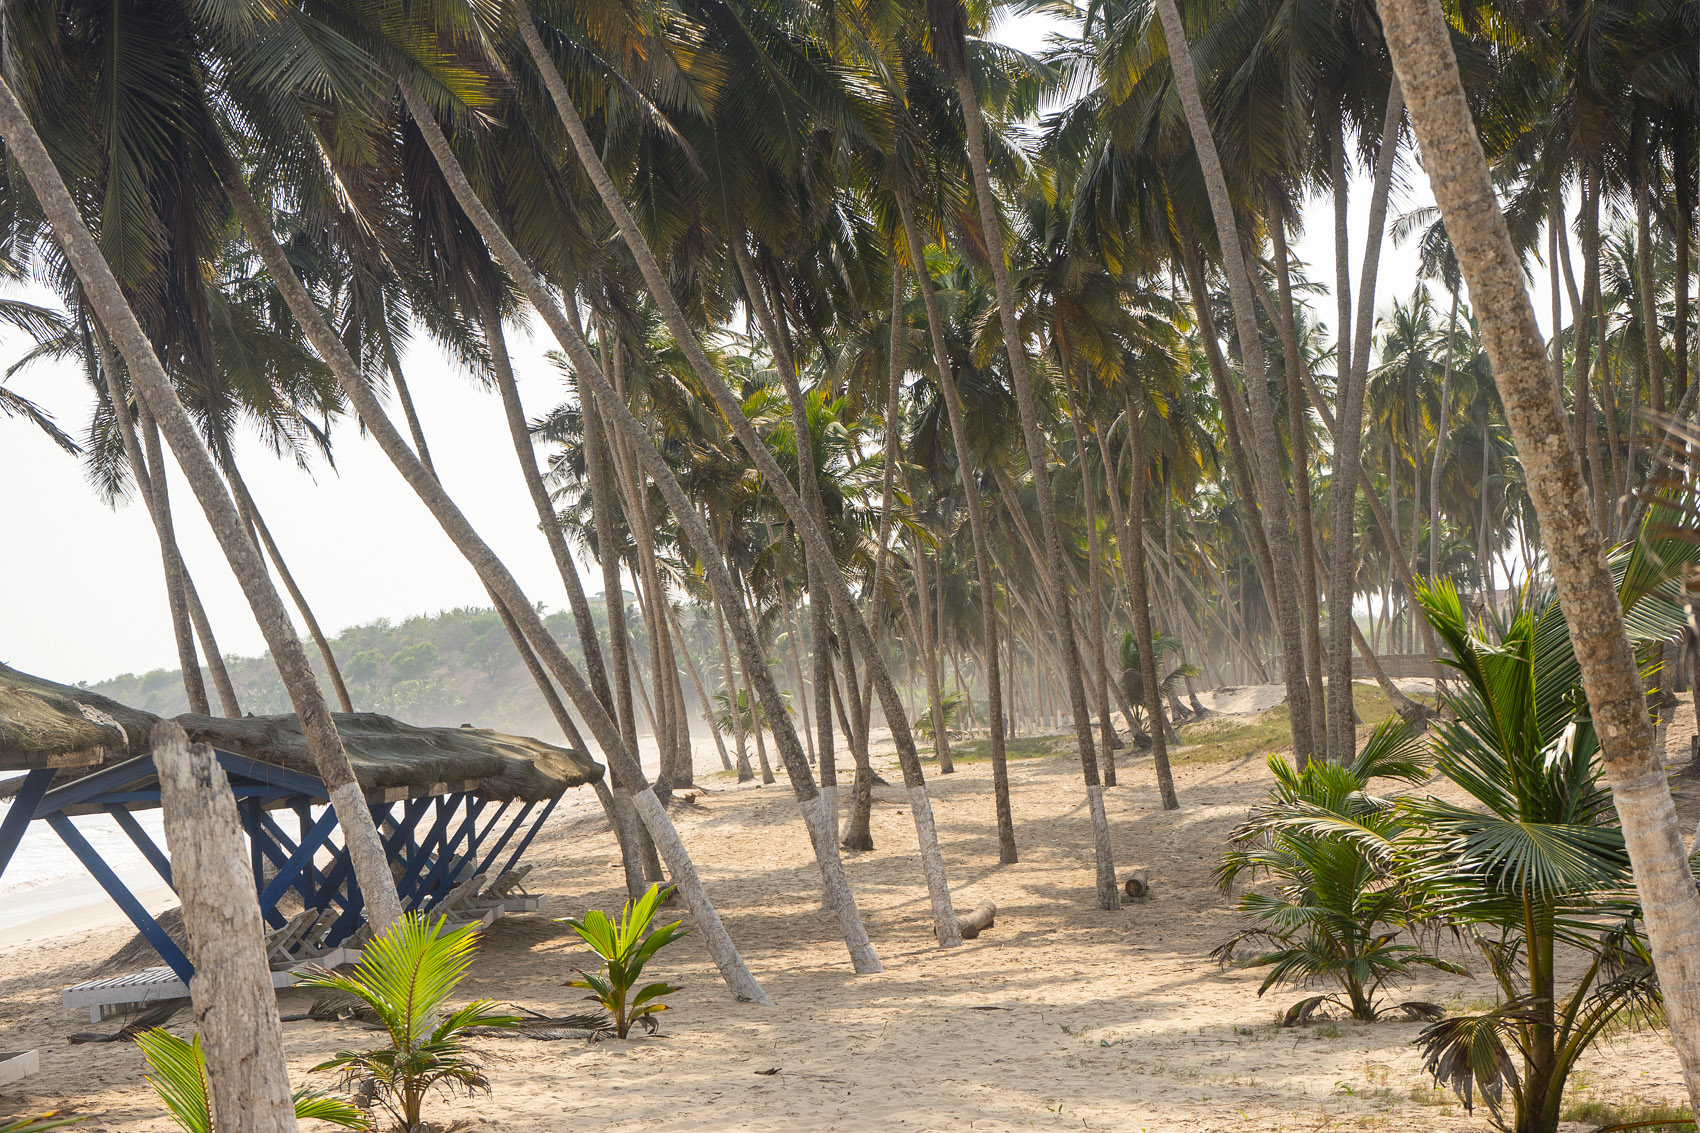 Kokos Palmen in Ghana am Strand